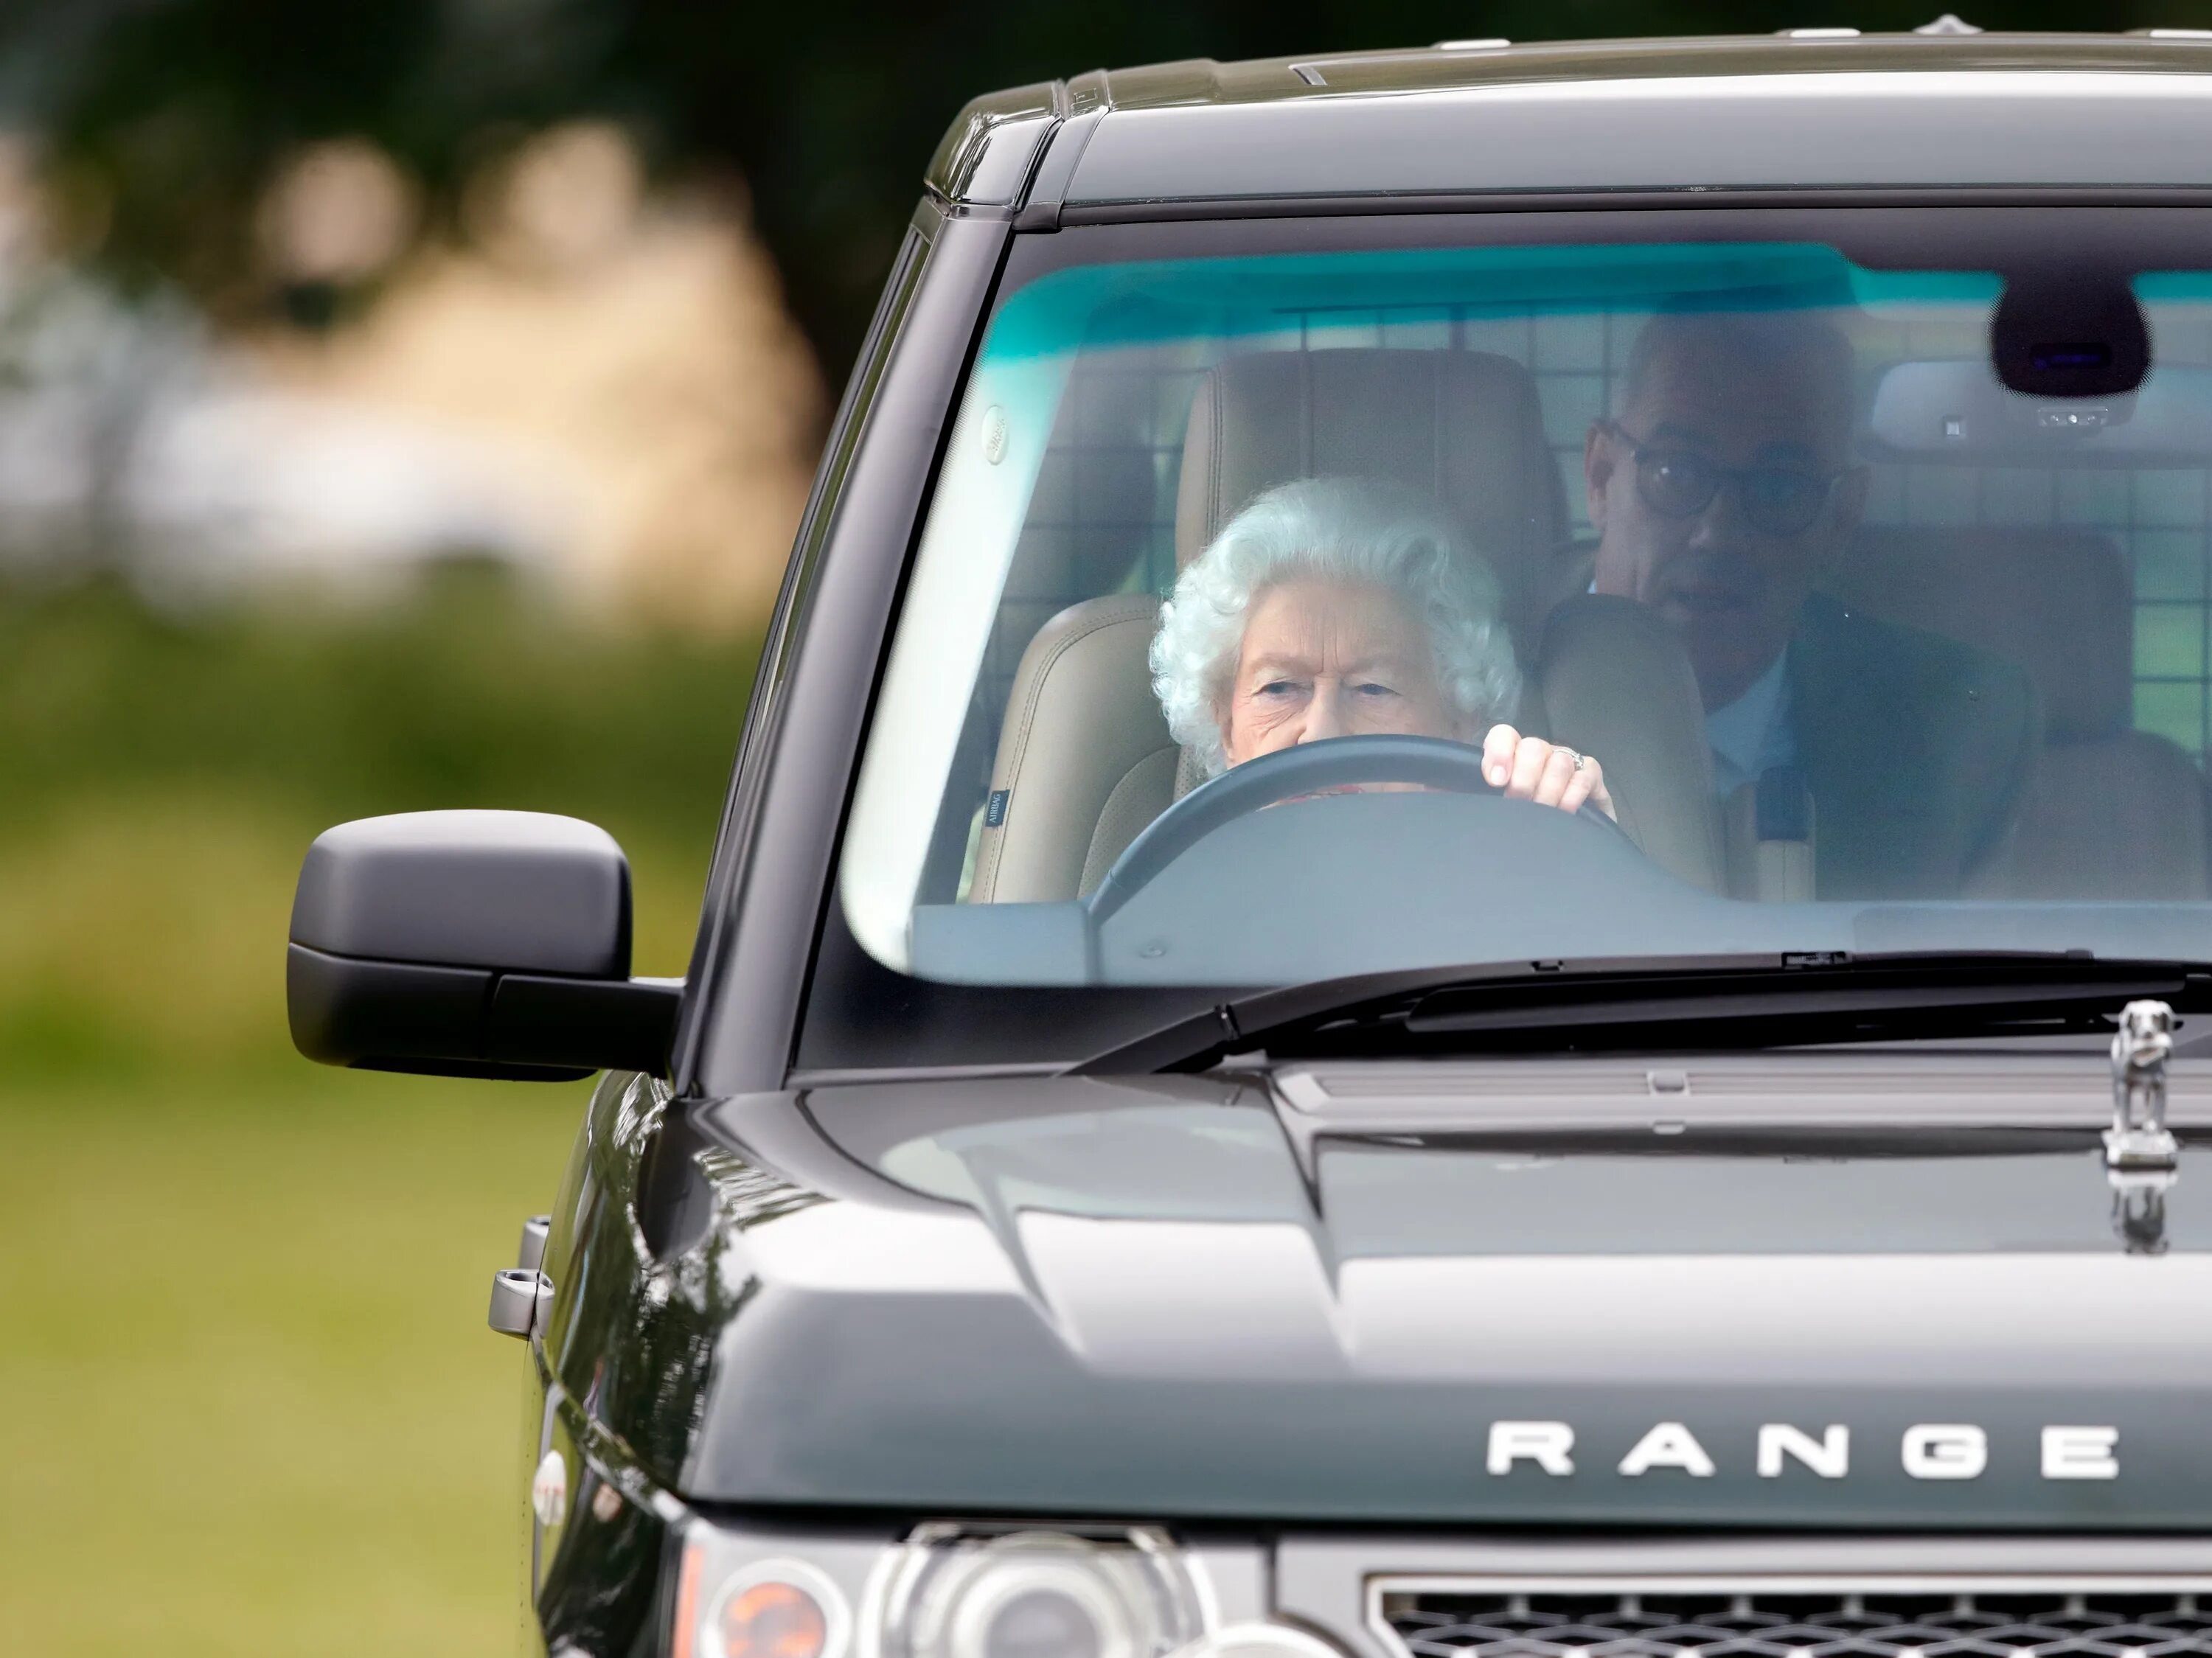 Включи водитель 2. Елизавета 2 на Рендж Ровере. Range Rover королевы Елизаветы. Королева Елизавета за рулем range Rover. Елизавета за рулем Рендж ровера.